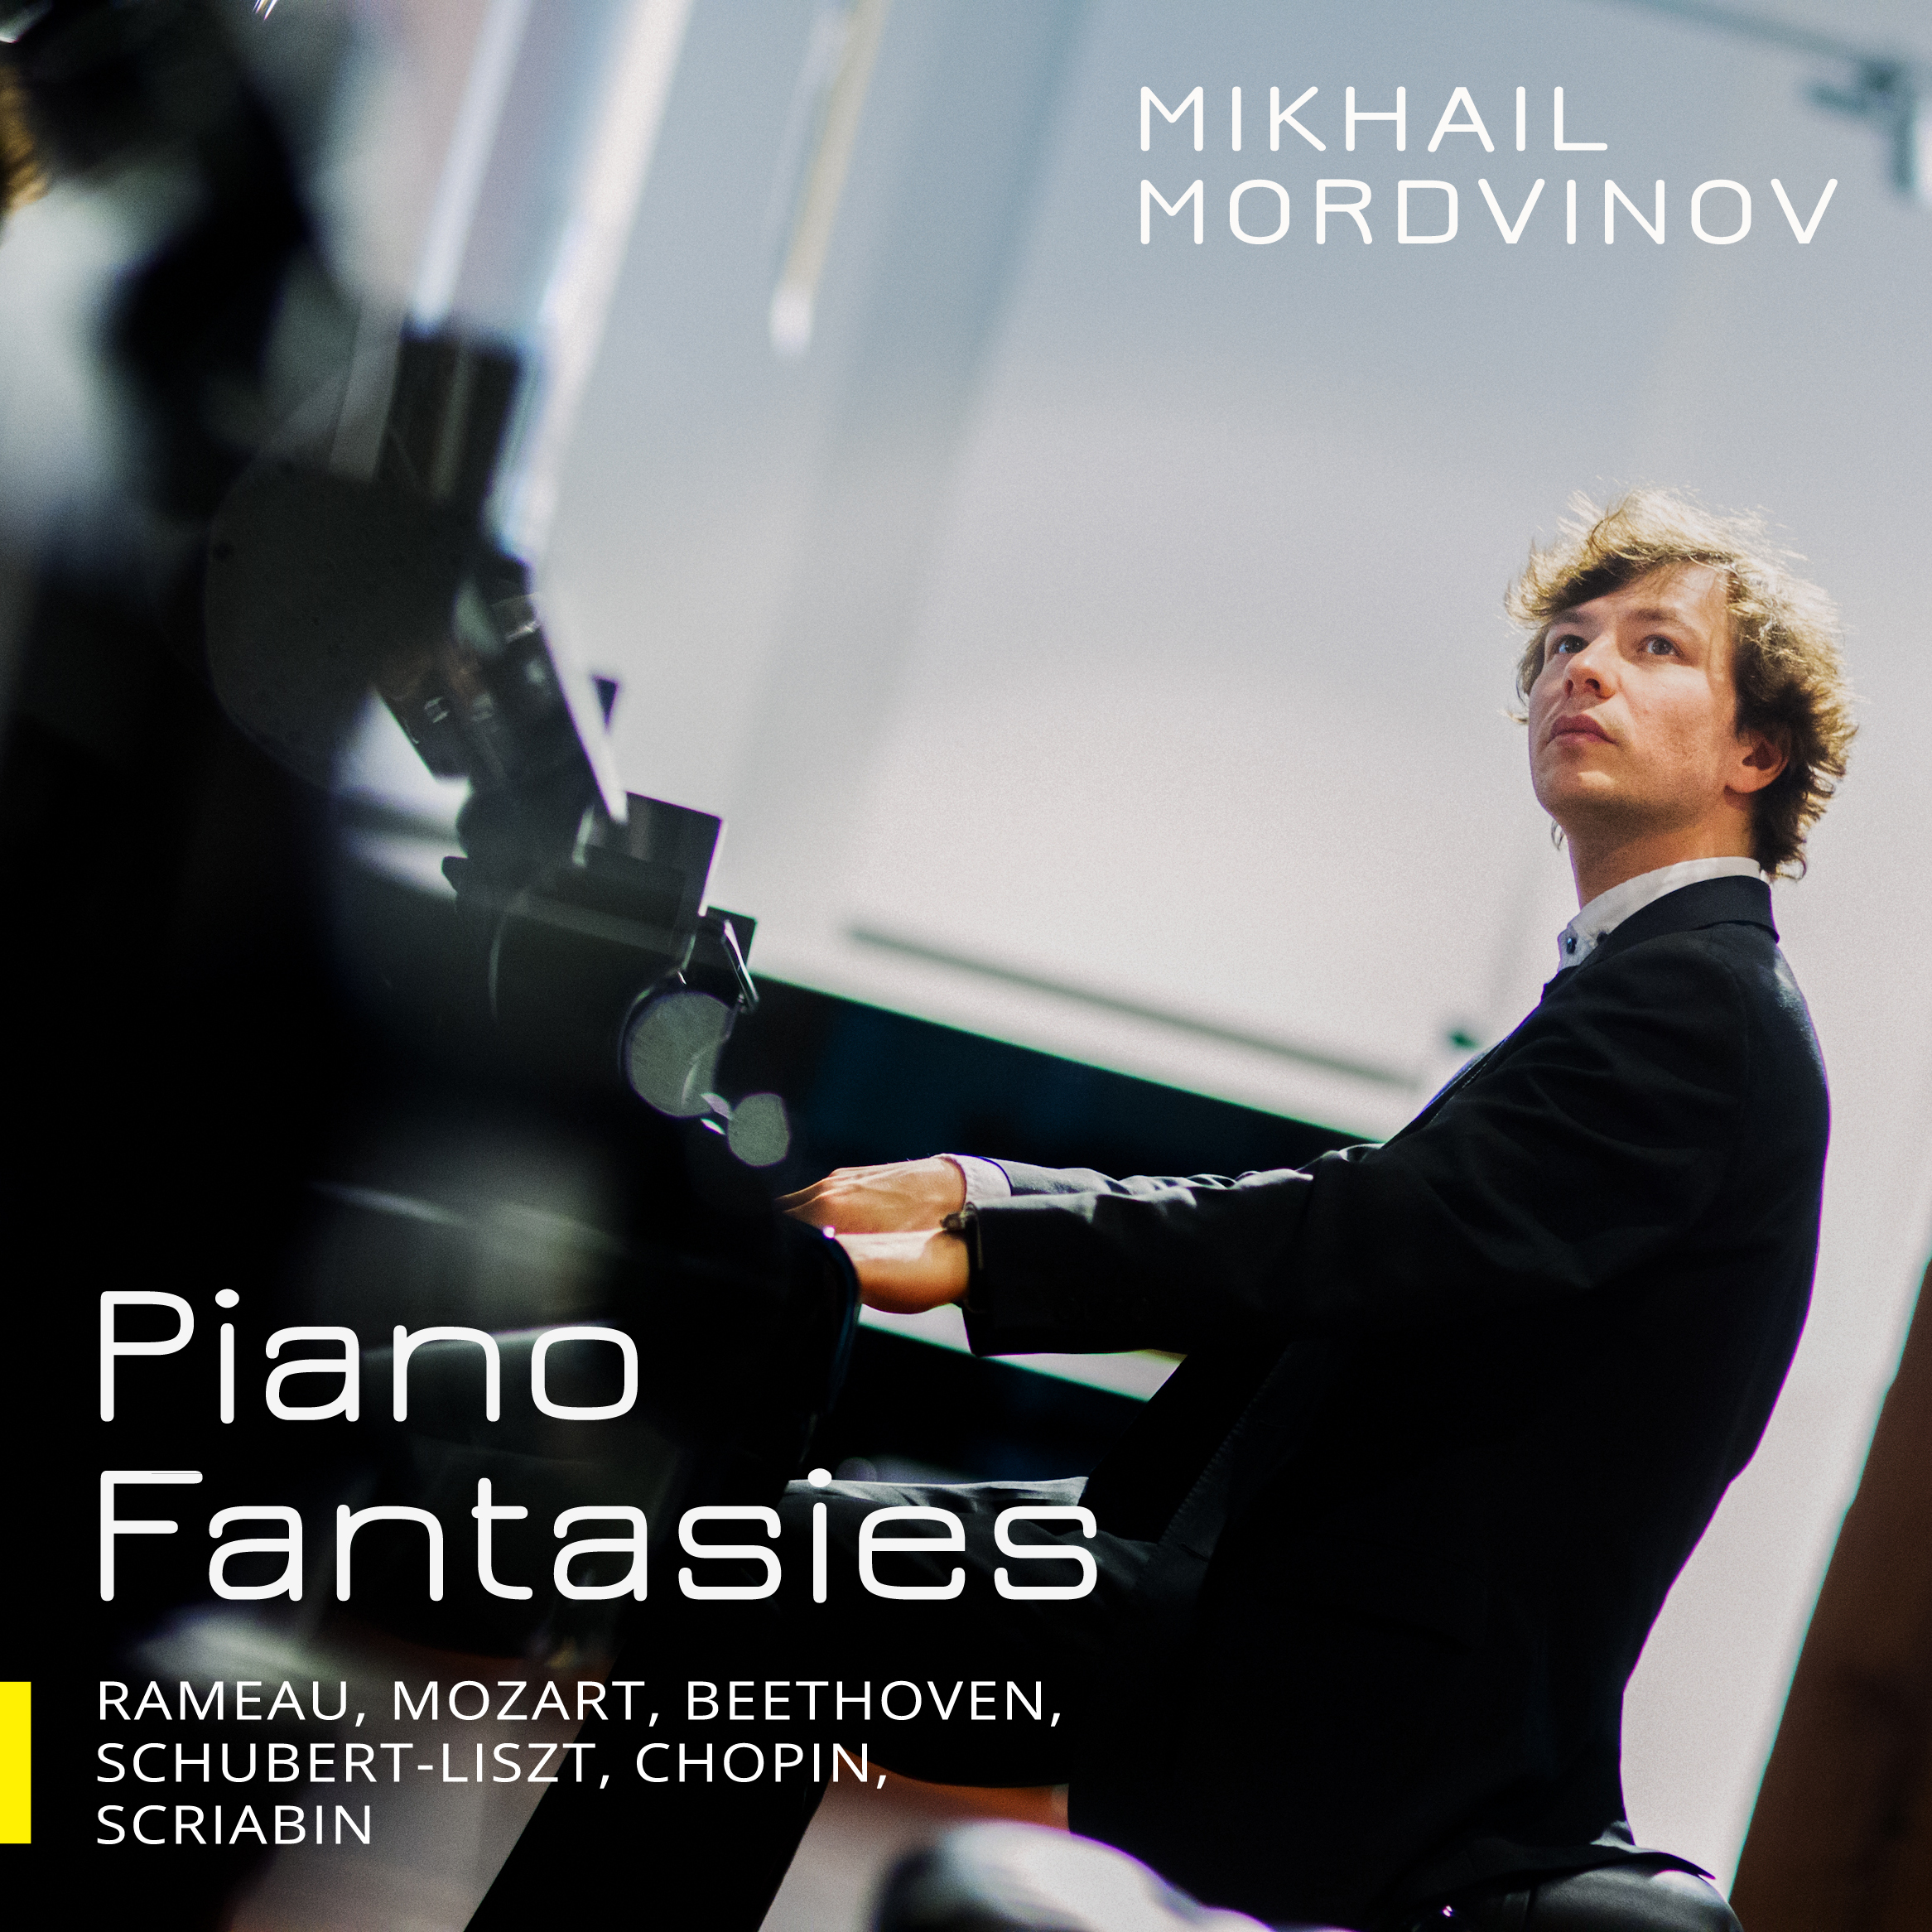 Piano Fantasies: Rameau, Mozart, Beethoven, Schubert-Liszt, Chopin, Scriabin